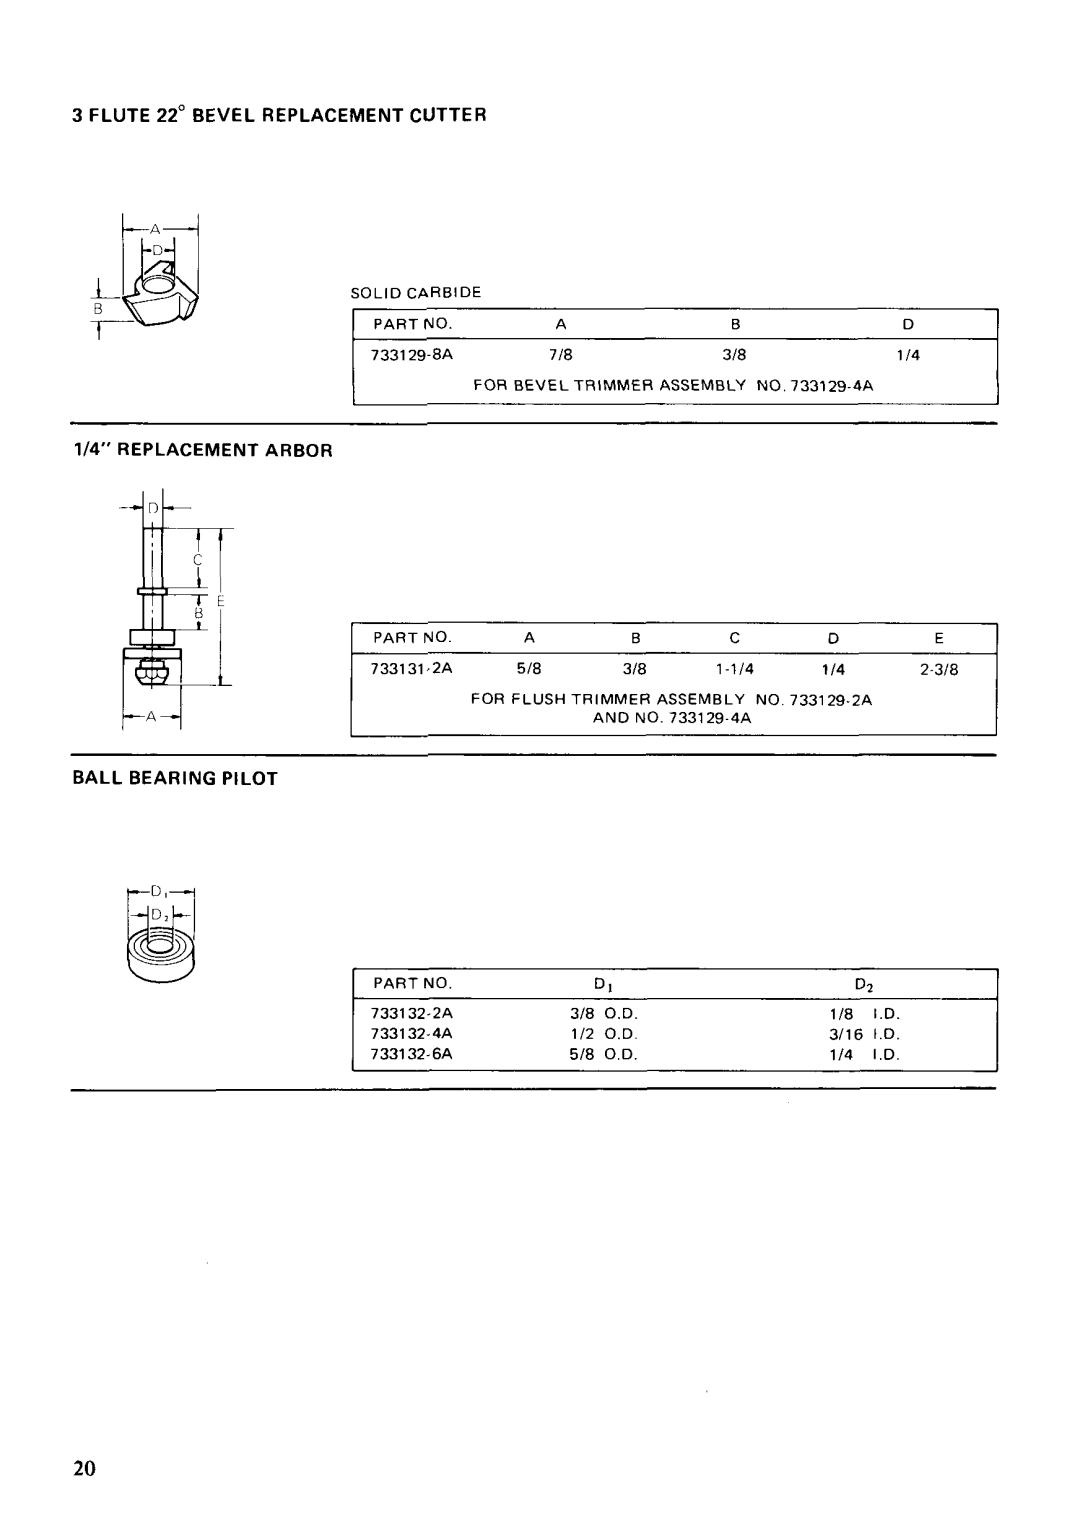 Makita 3702B instruction manual FLUTE 22 BEVEL REPLACEMENT CUTTER, Replacement Arbor, Ball Bearing Pilot, 0 . D 